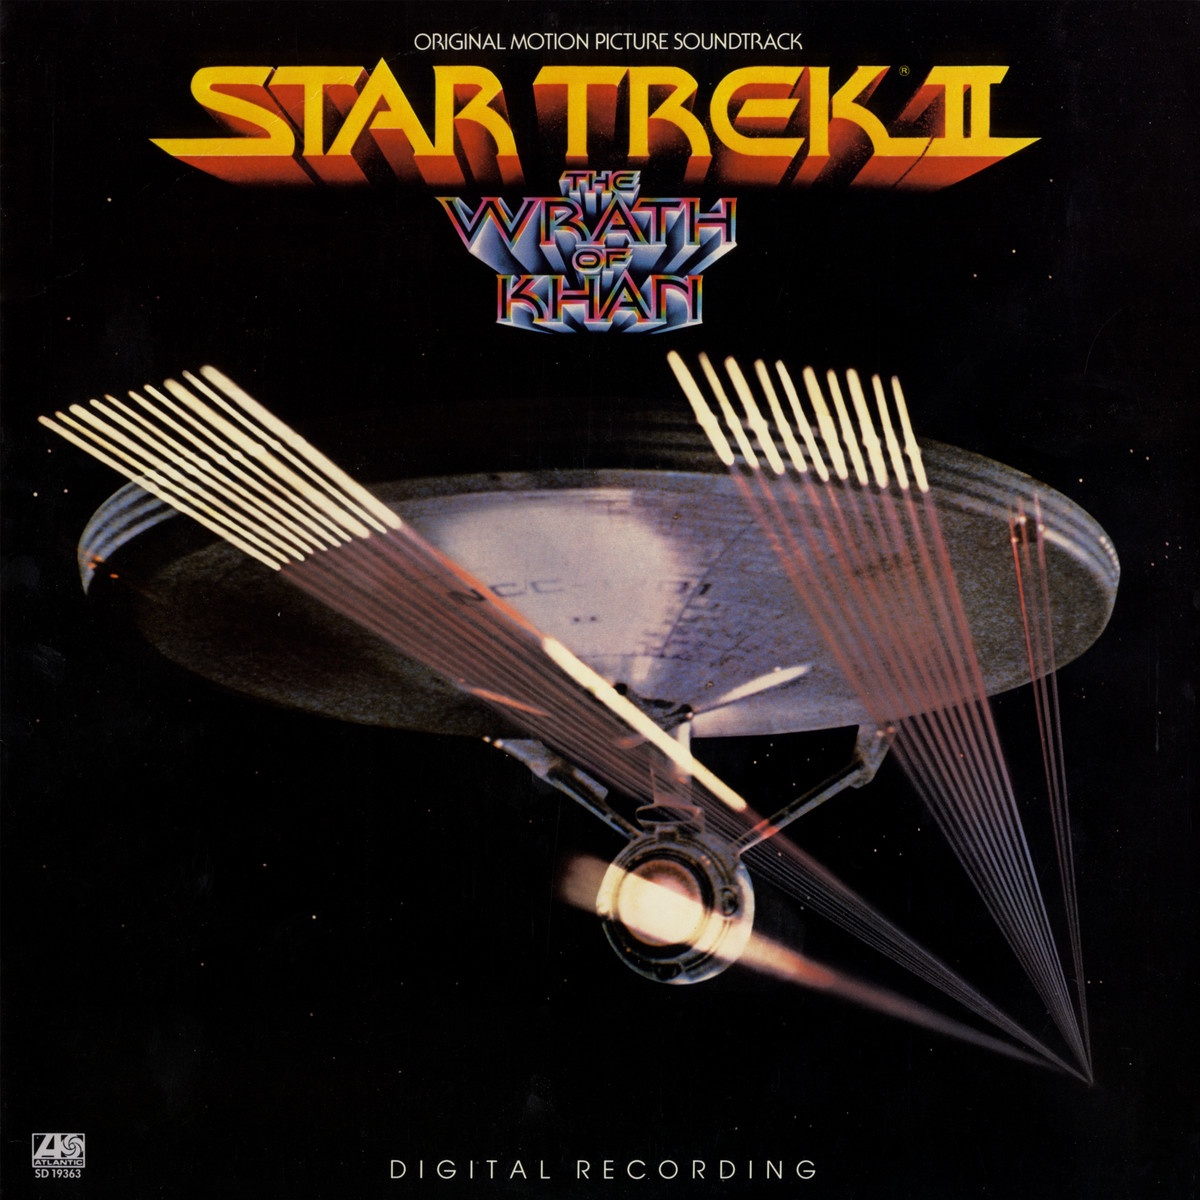 Star Trek II: The Wrath of Khan (Original Motion Picture Soundtrack)